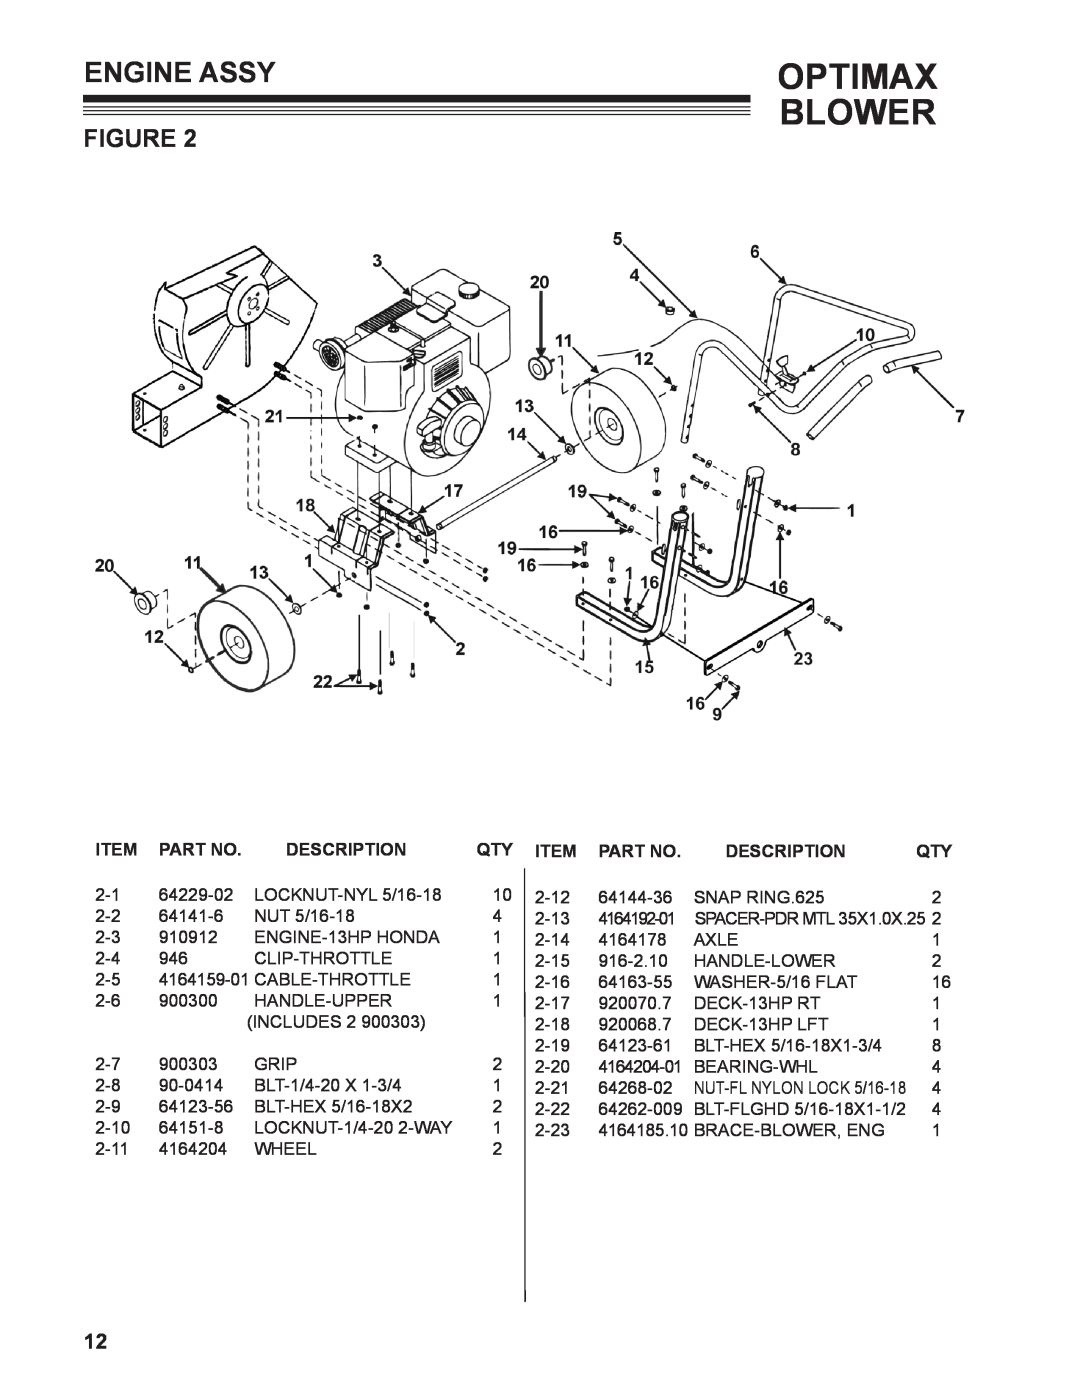 Little Wonder 9131-00-01 technical manual Engine Assy, Optimax Blower, Description, NUT-FL NYLON LOCK 5/16-18 